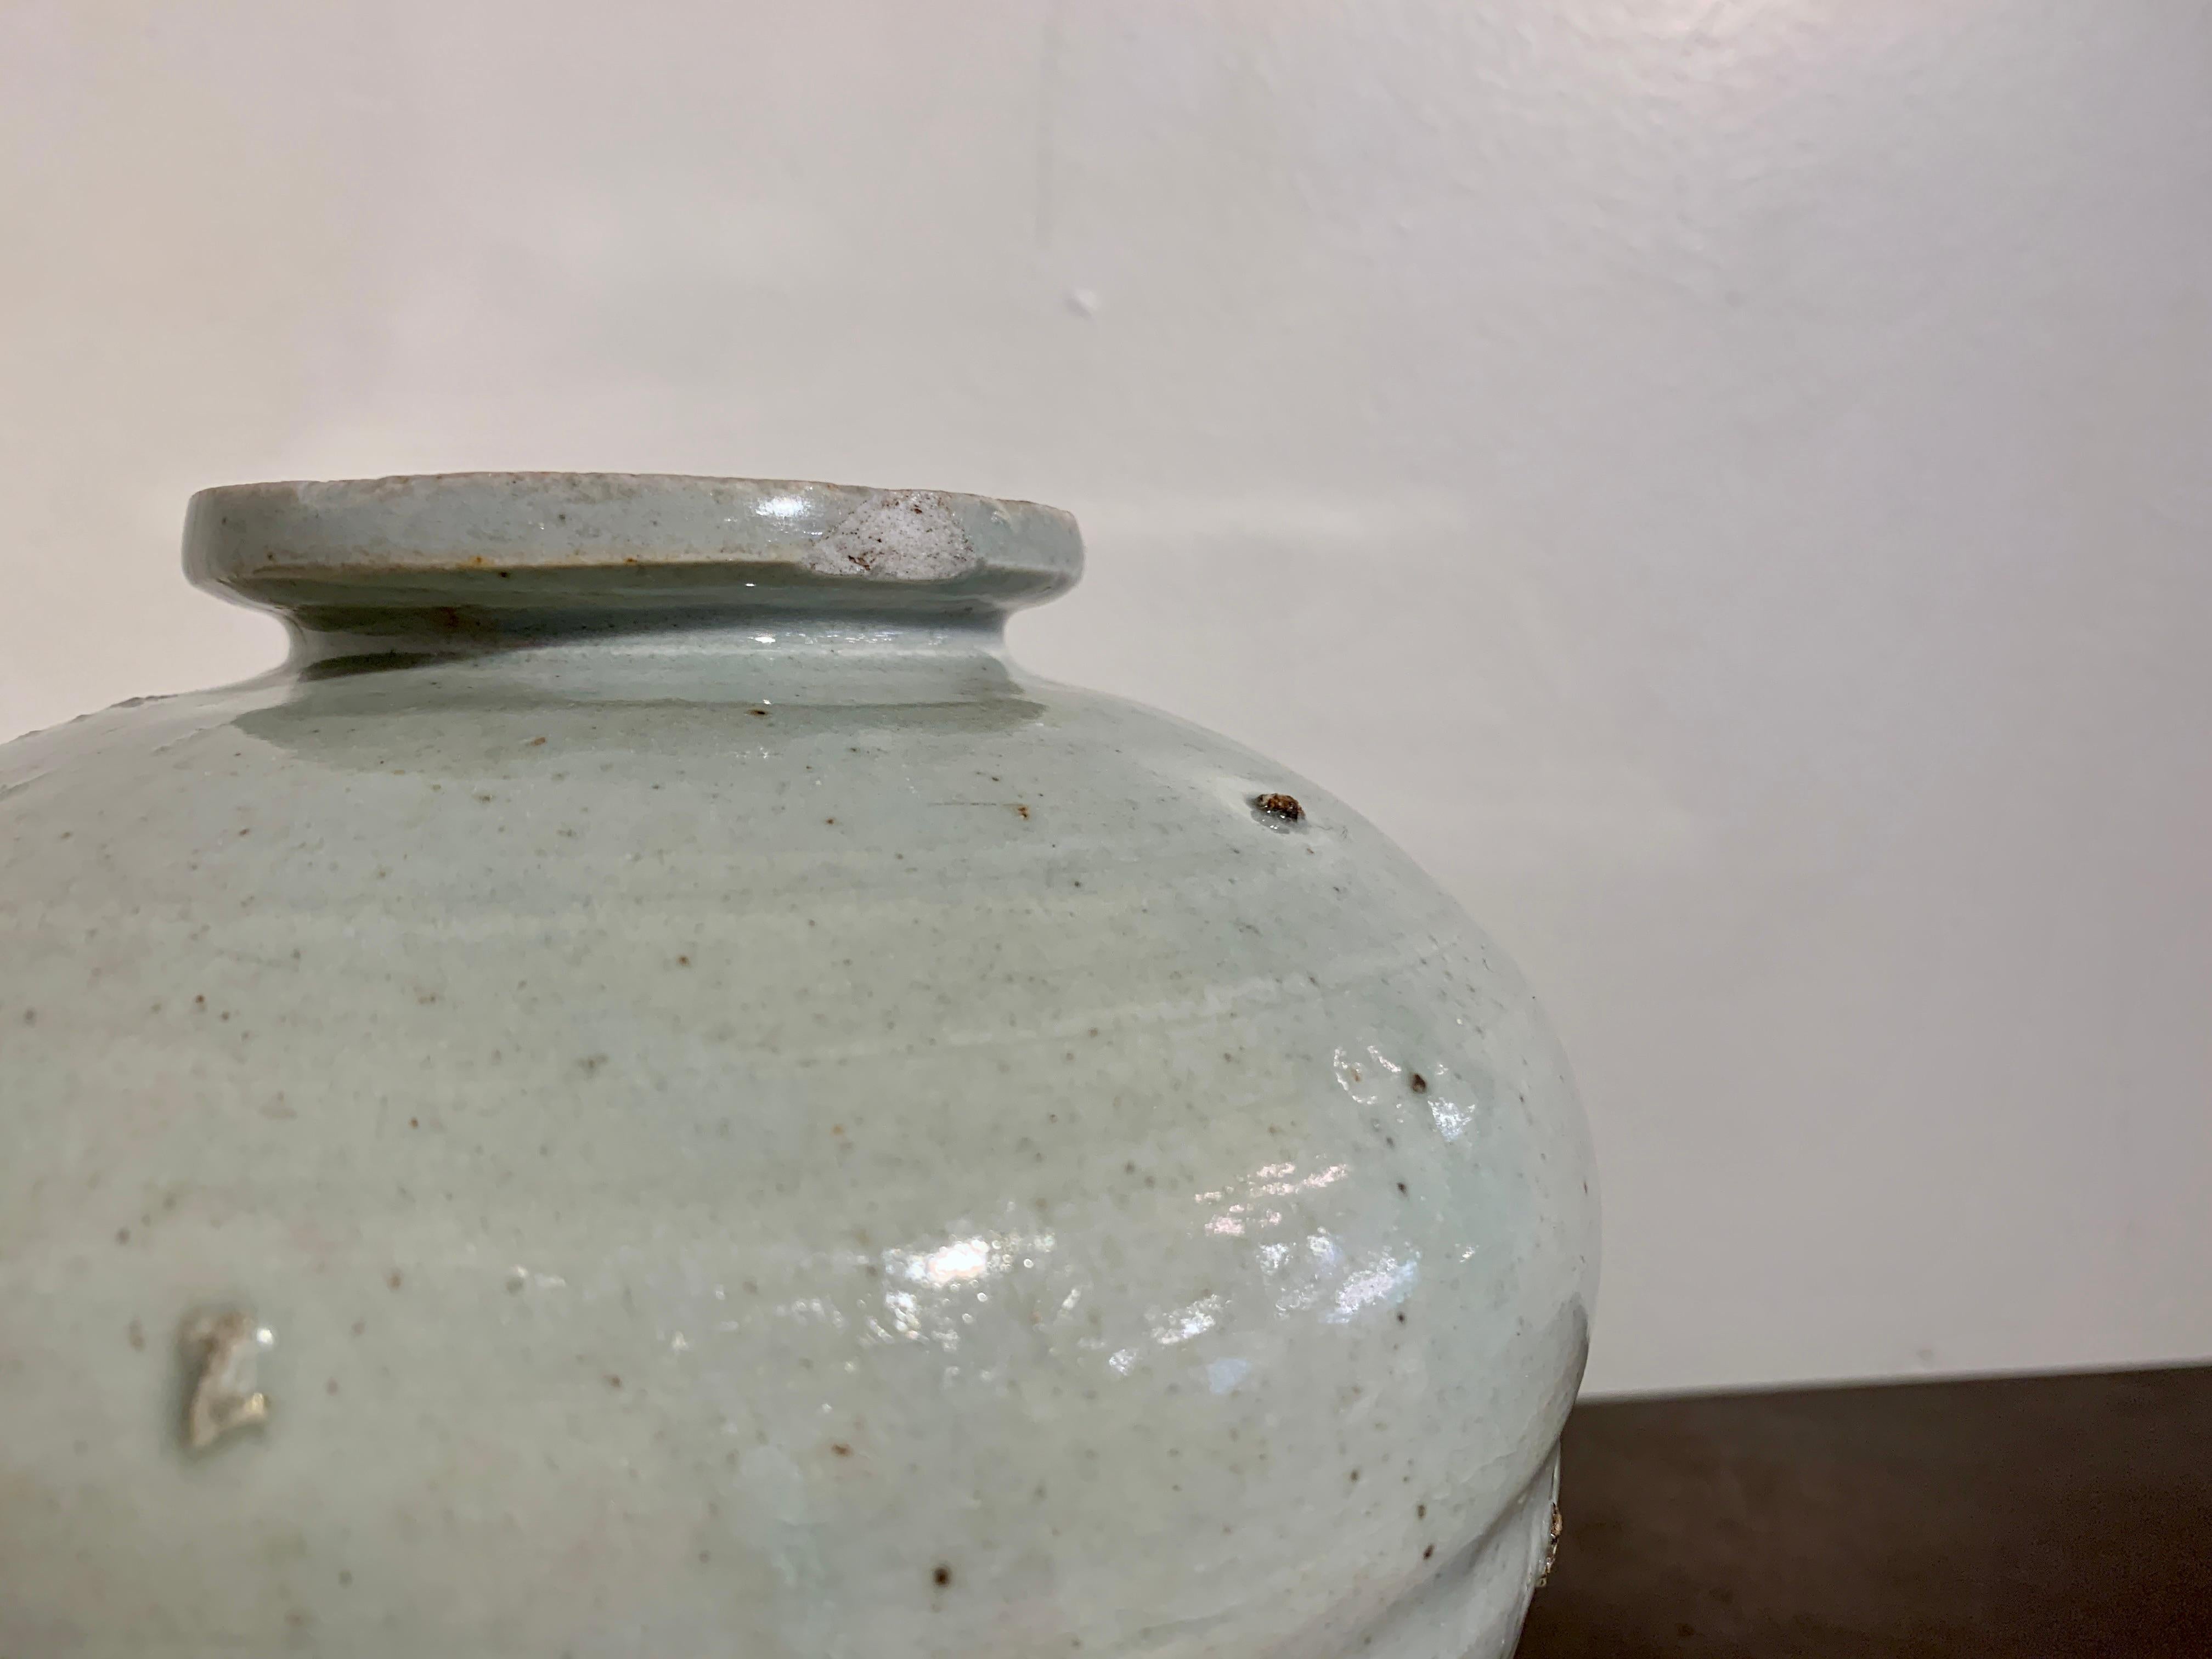 Fired Korean White Glazed Jar, Joseon Dynasty, 18th Century, Korea For Sale